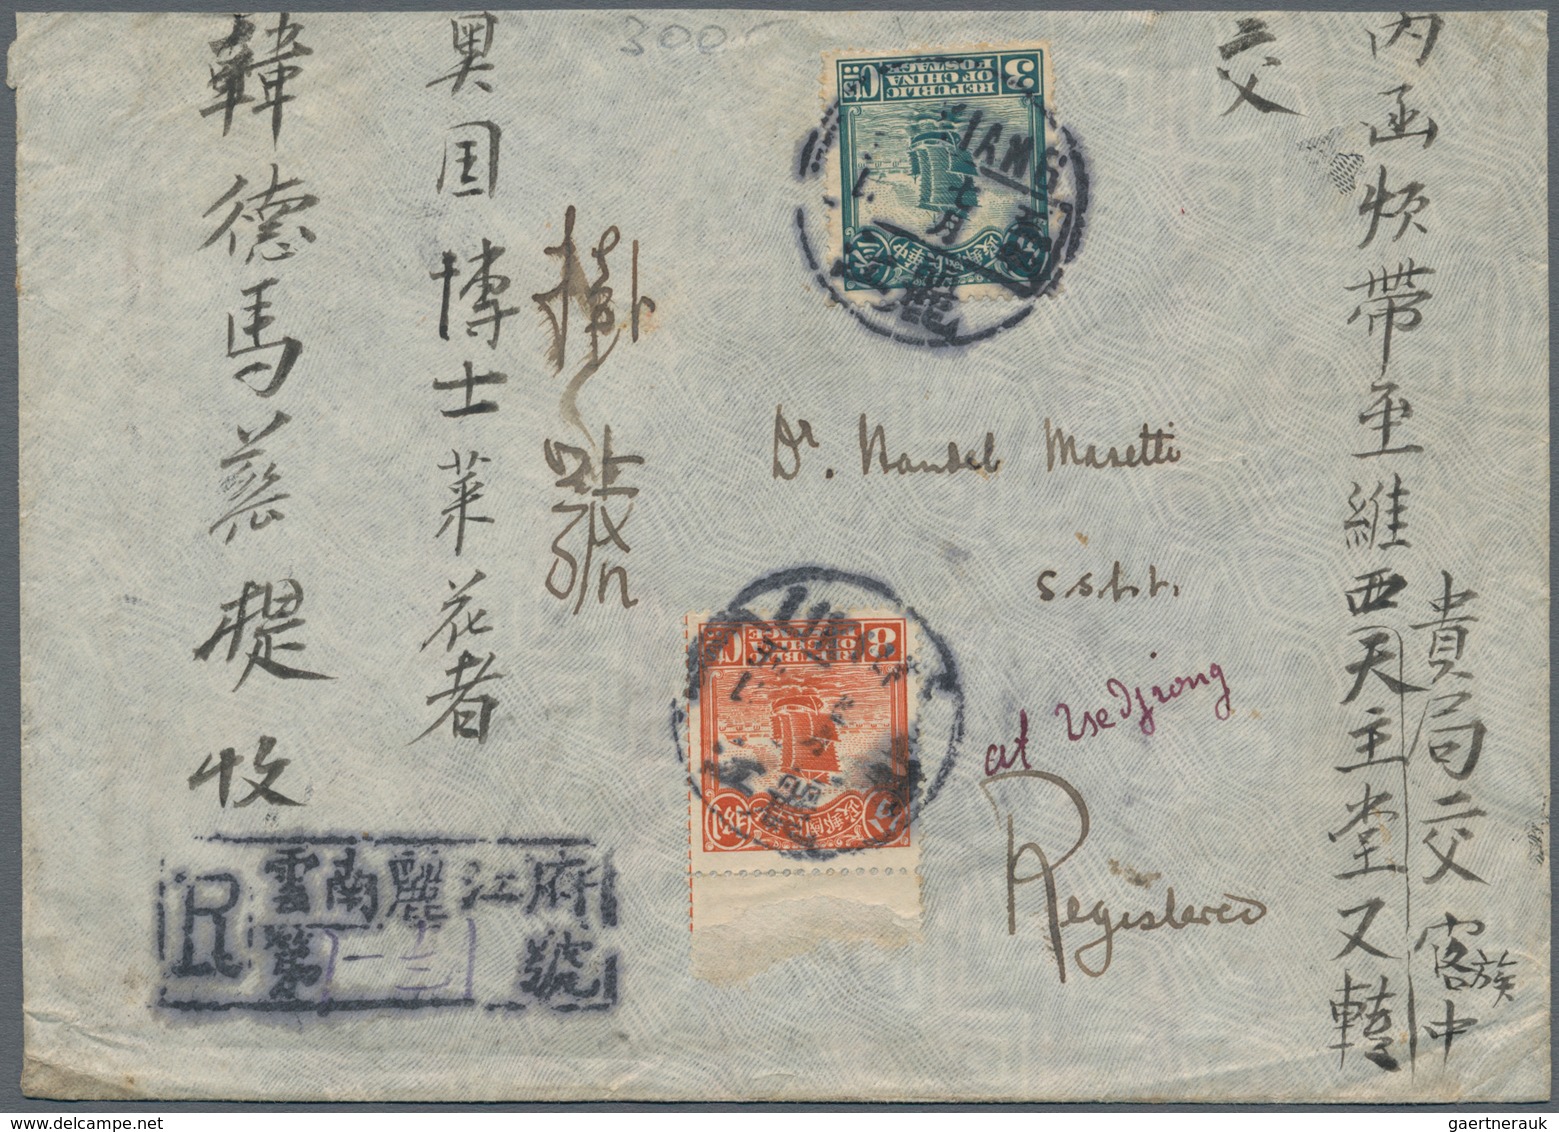 China: 1915, Peking Printing, Junk 8 C. Orange, A Top Margin Copy, With Junk 3 C. Green Both Tied Bo - 1912-1949 Republic